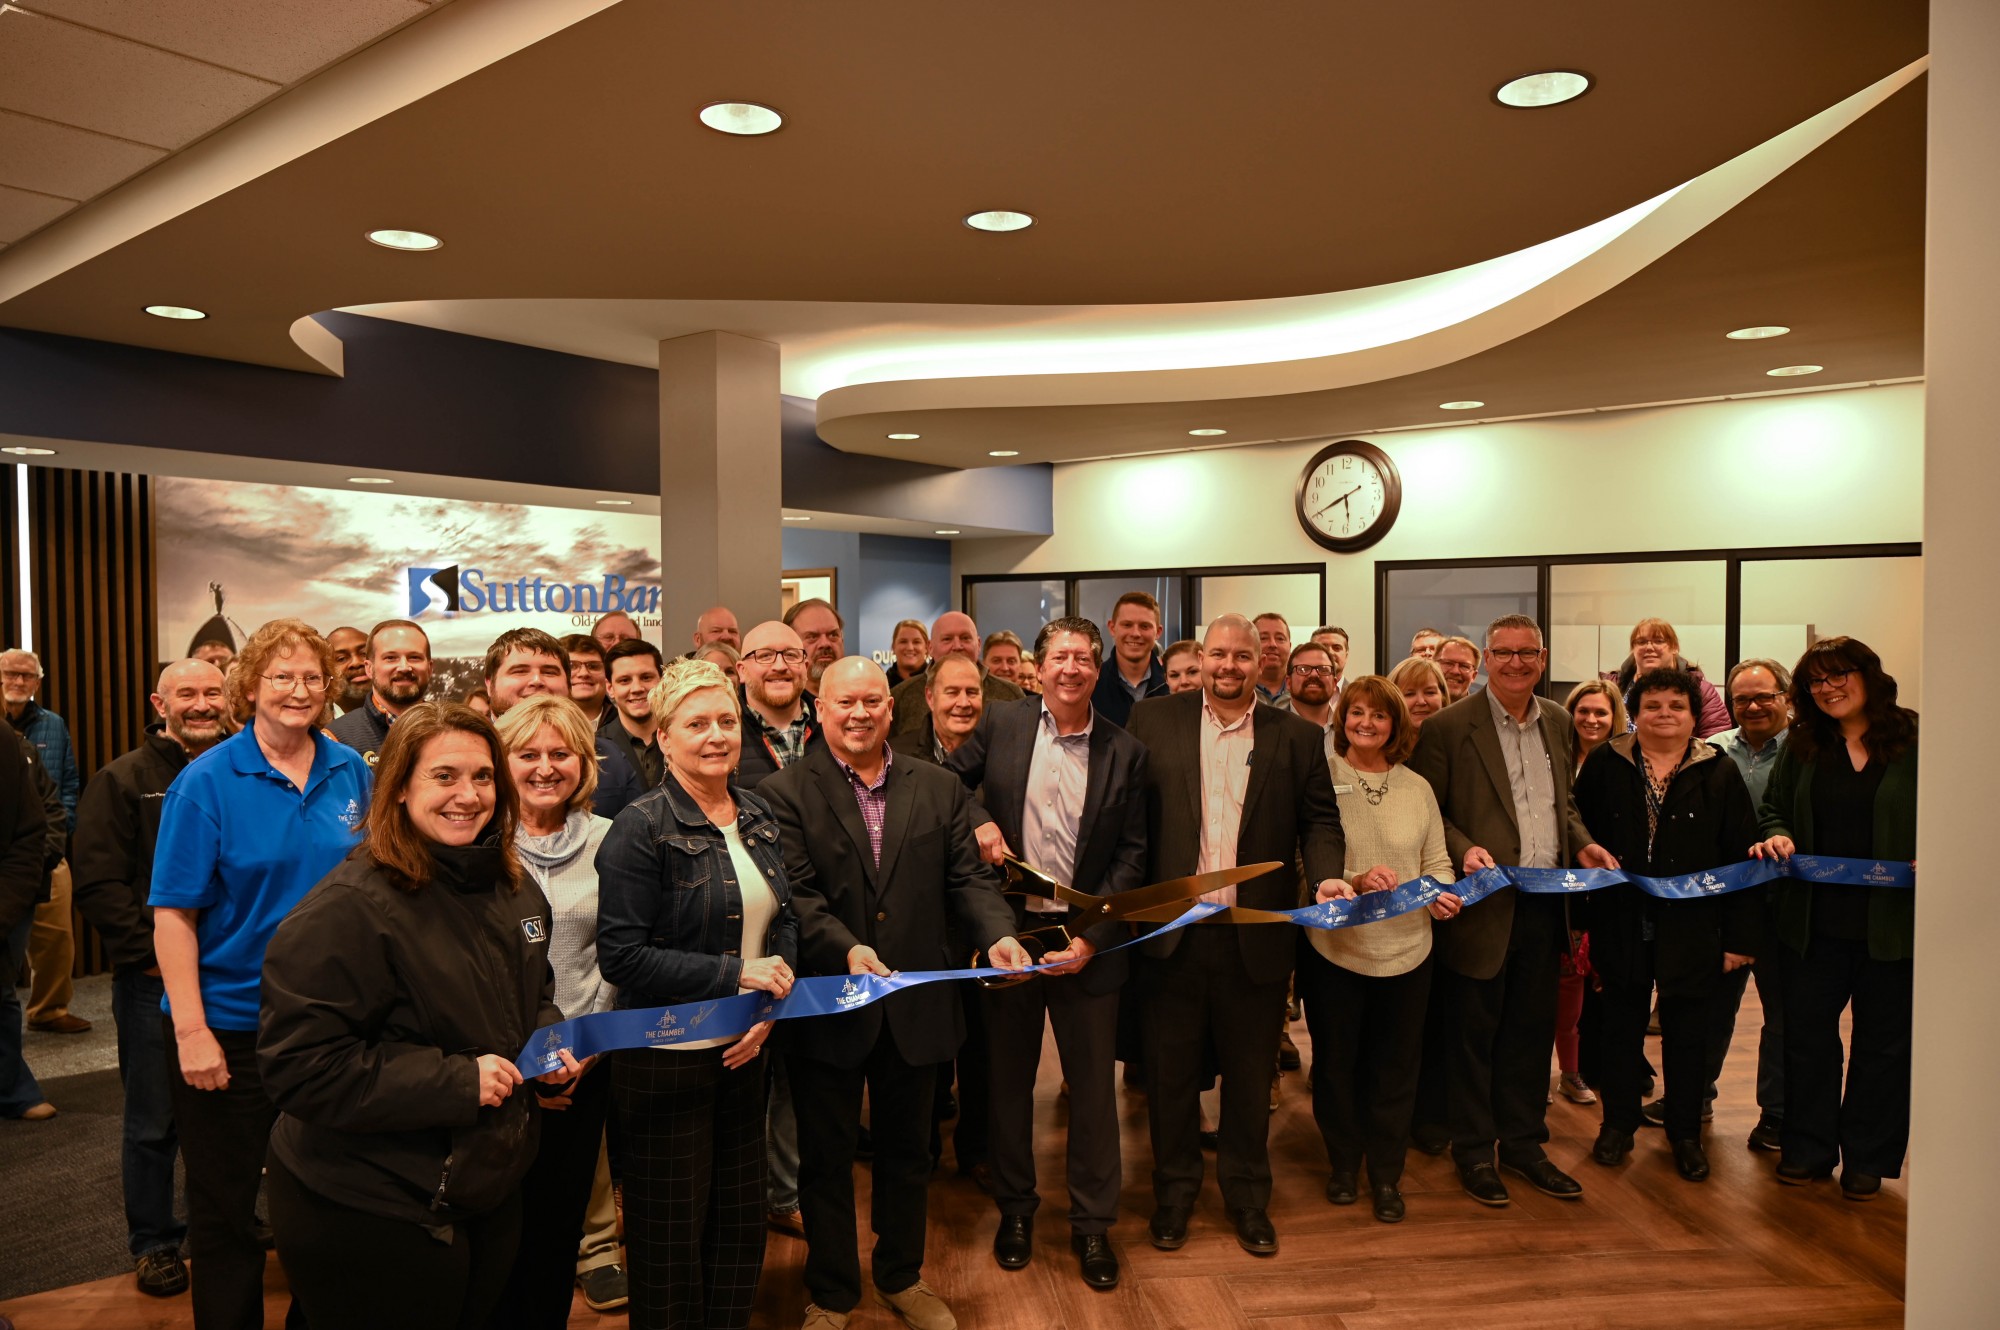 Sutton Bank Celebrates Grand Renovations to Tiffin Branch